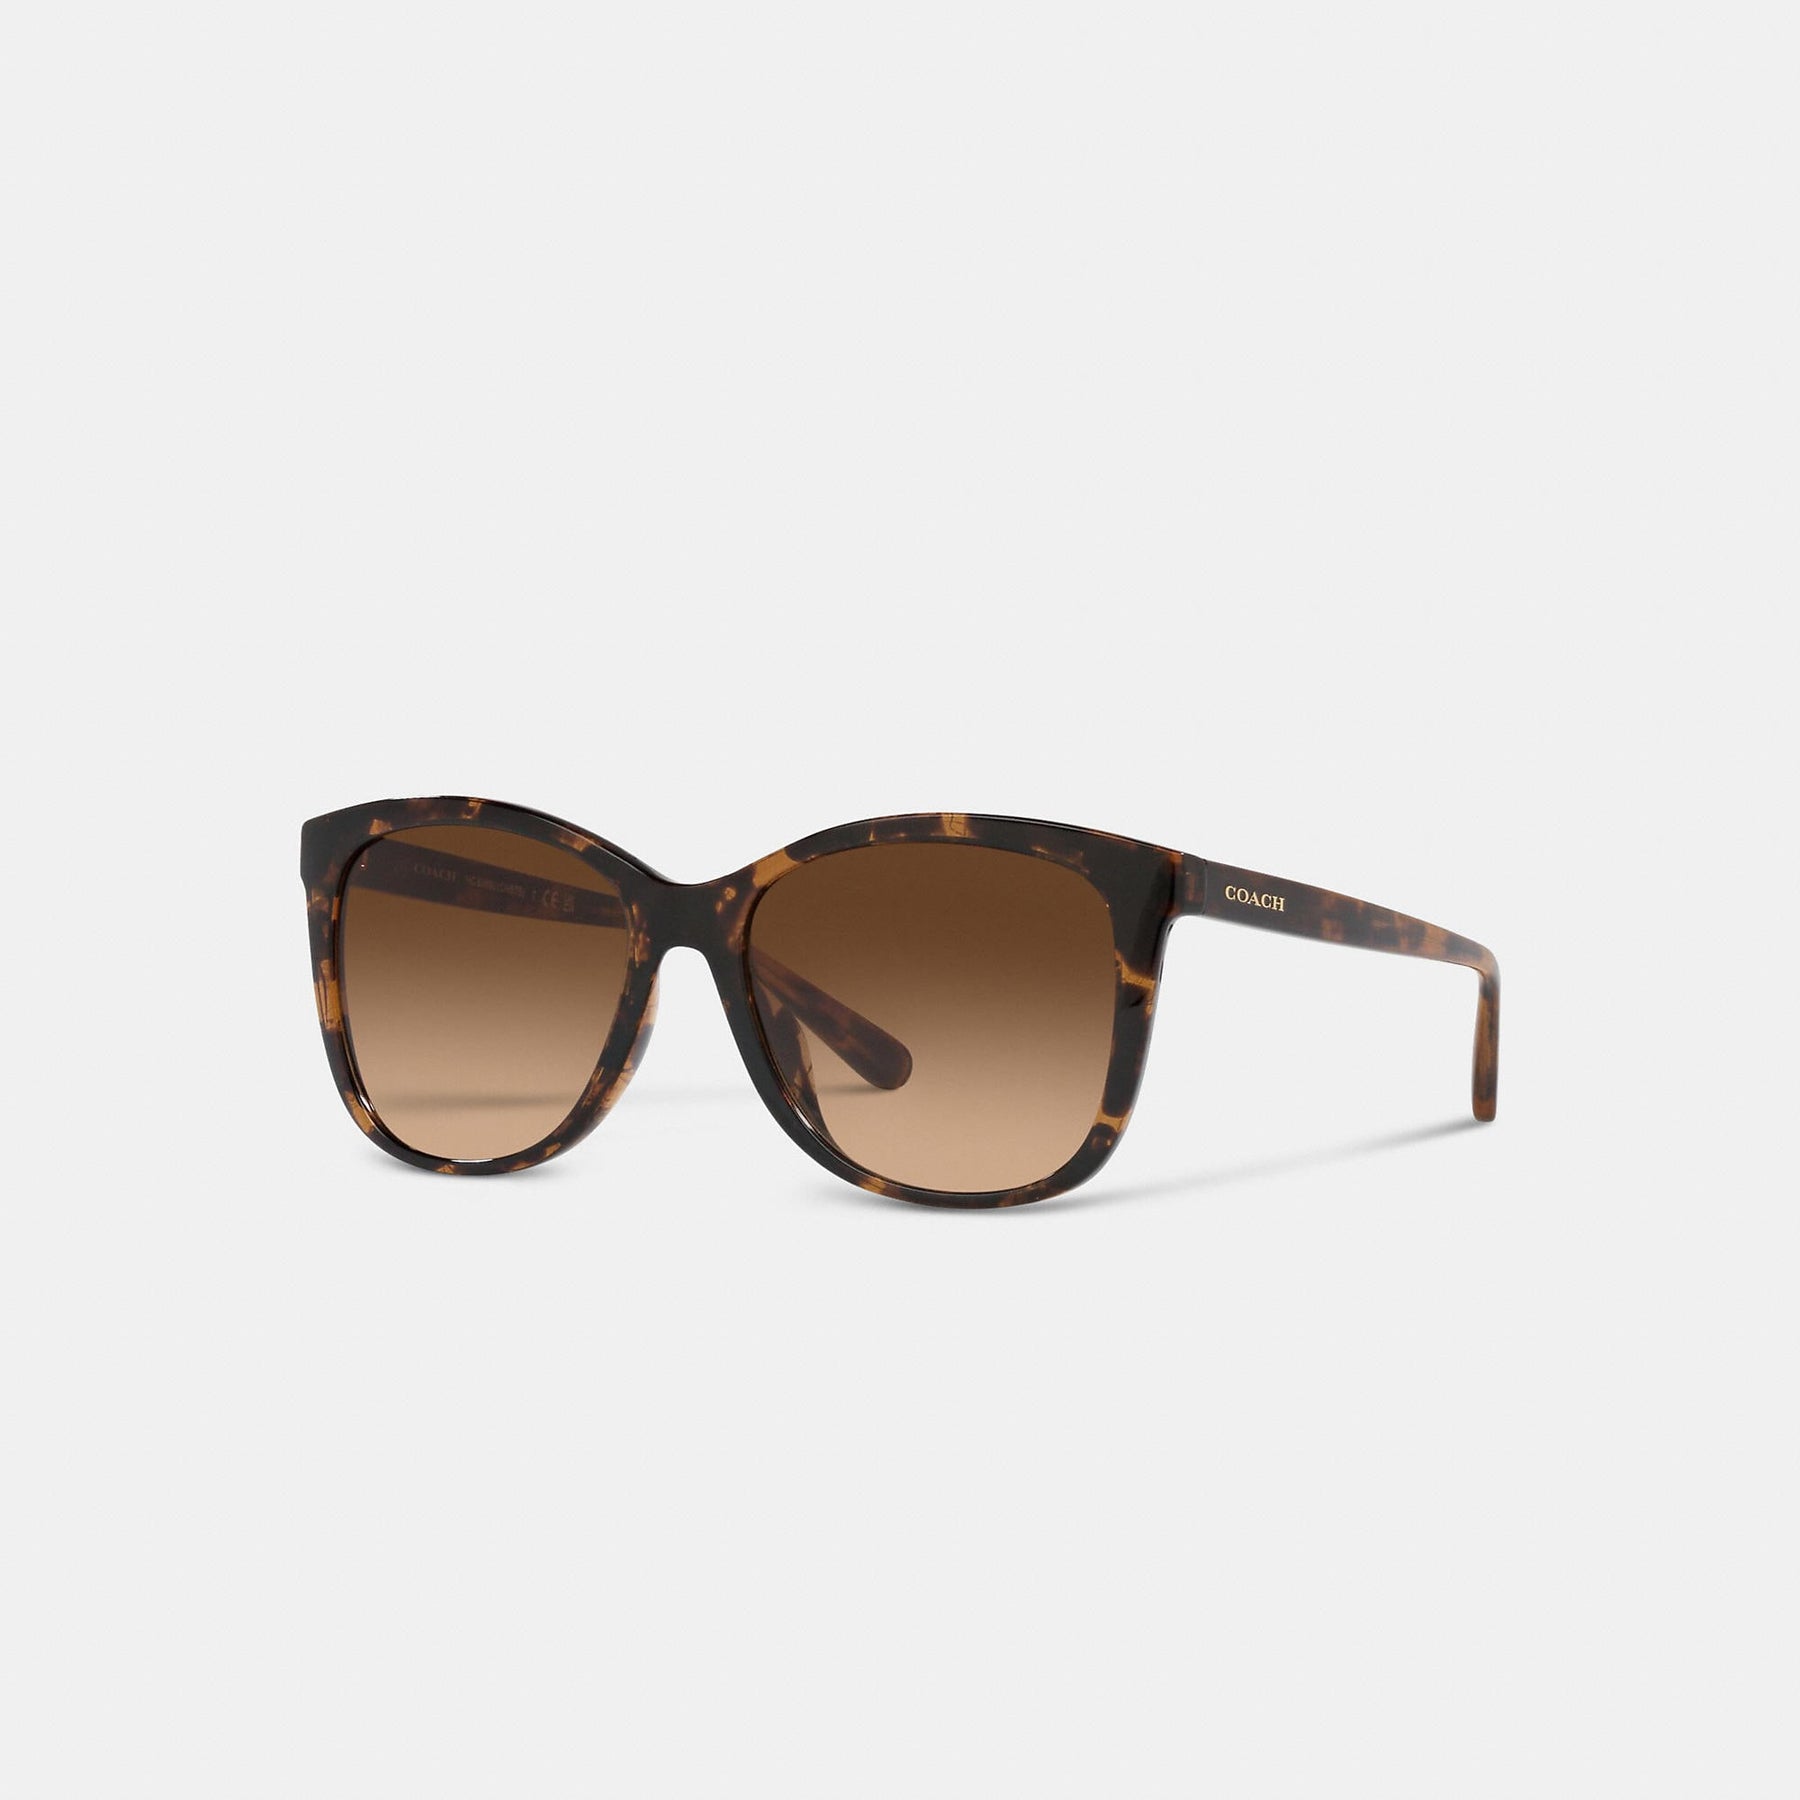 Coach Outlet Geometric Square Sunglasses